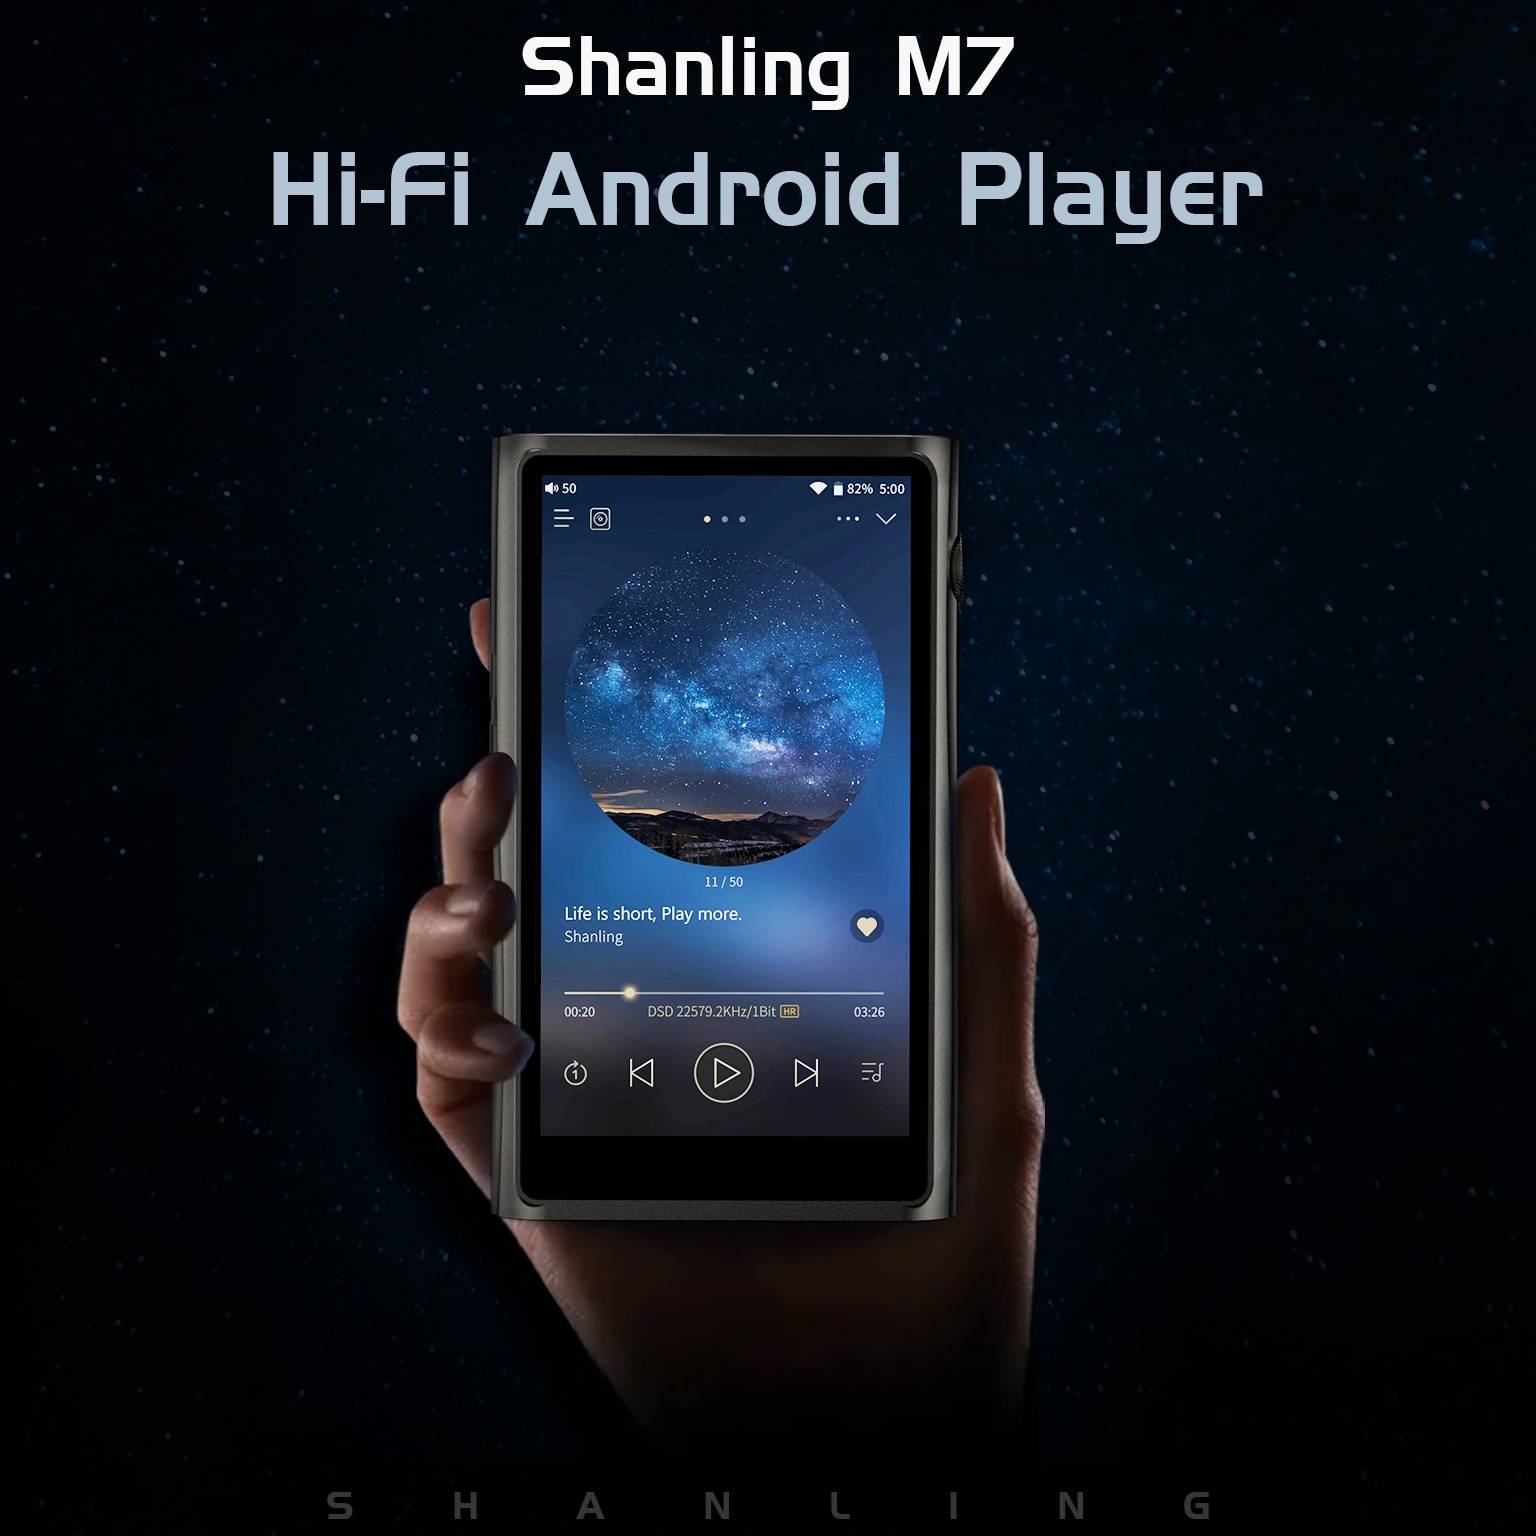 Shanling M7